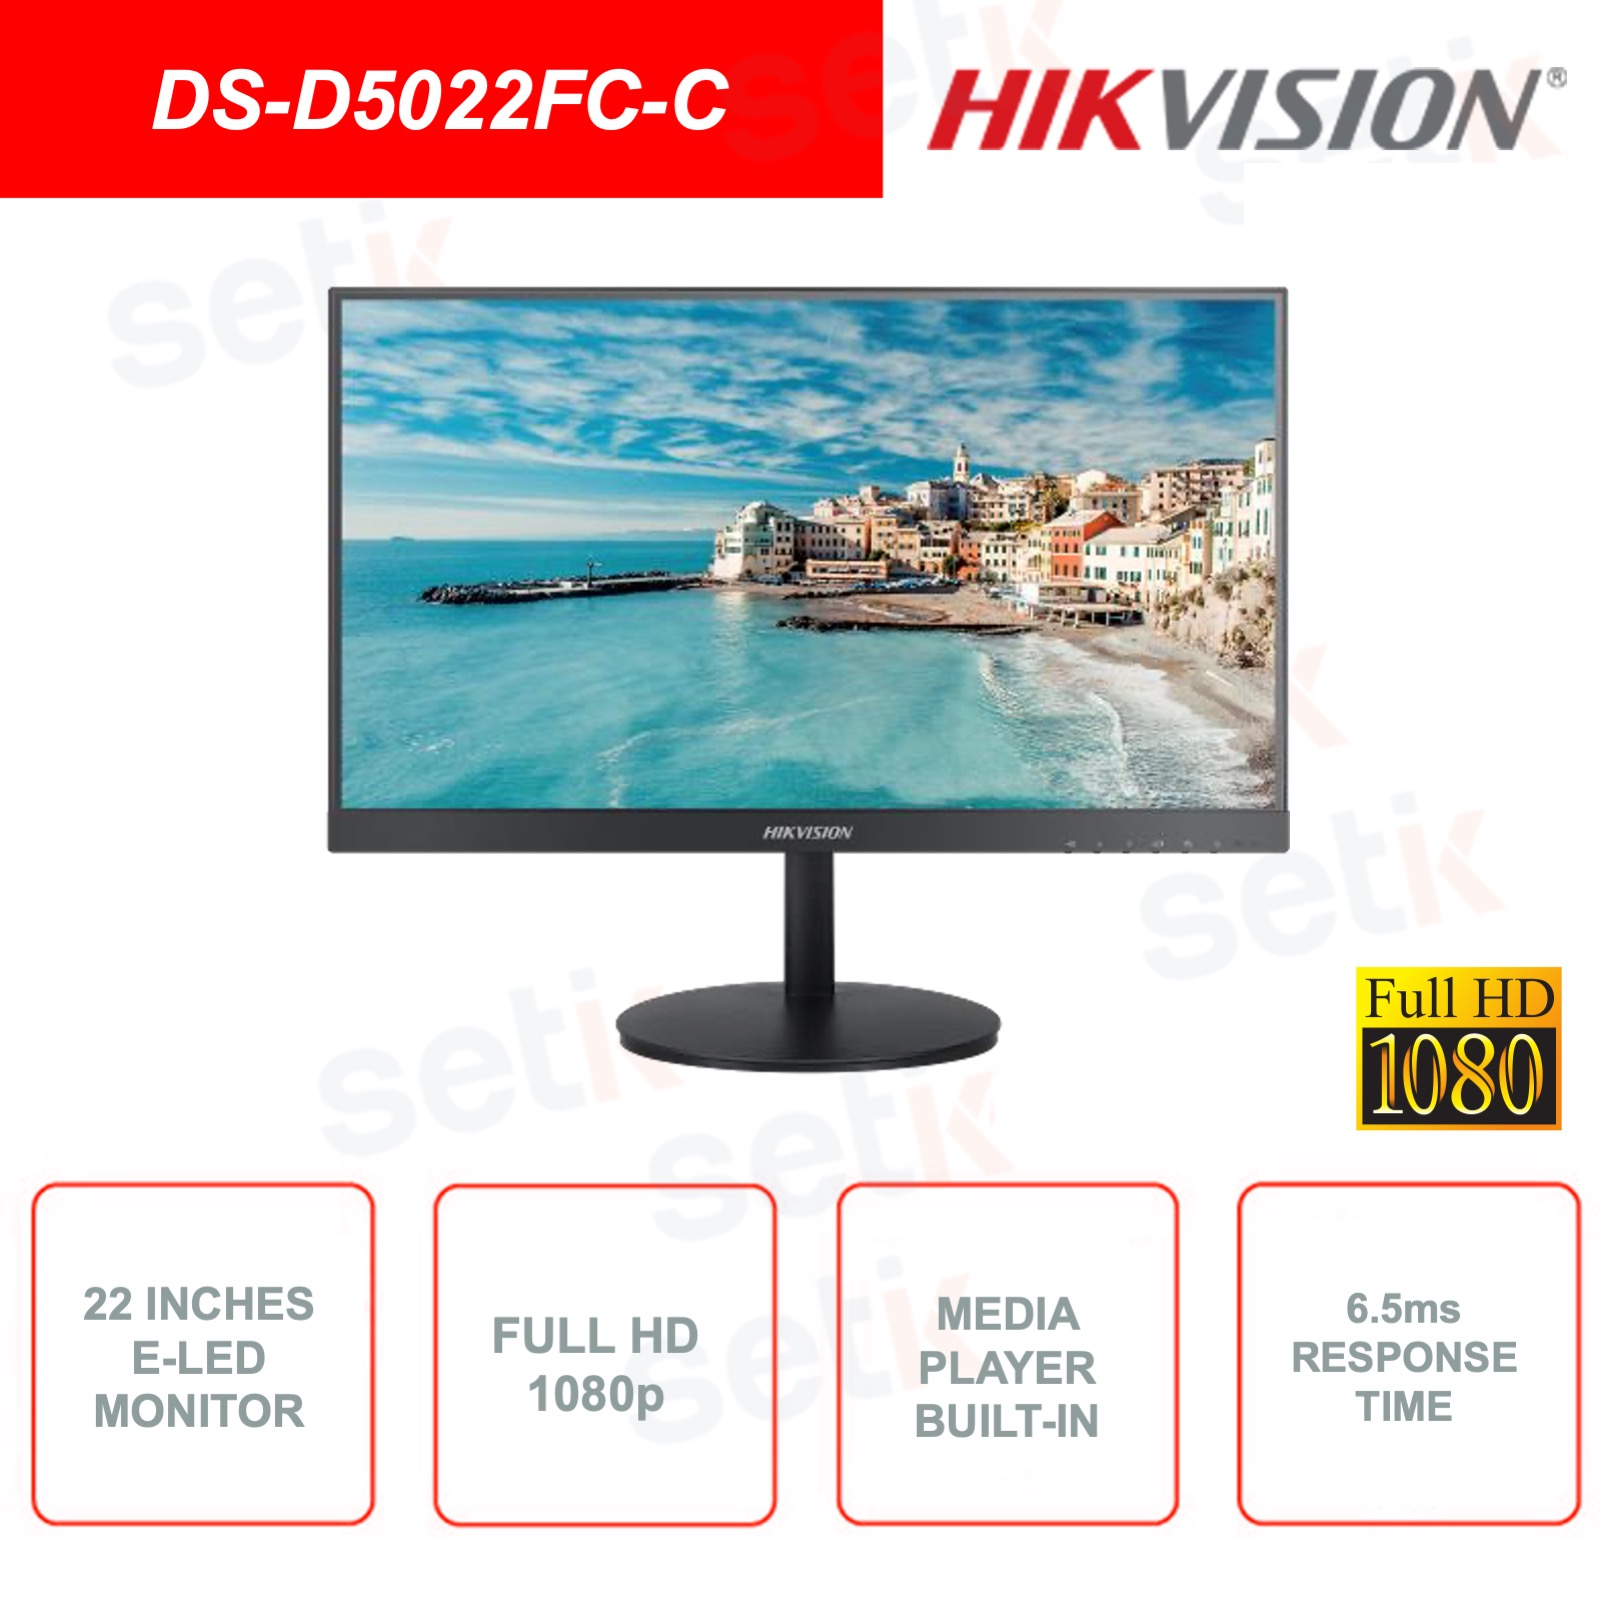 DS-D5022FC-C - Monitor Hikvision E-LED - 22 Pollici - 1080p FUll